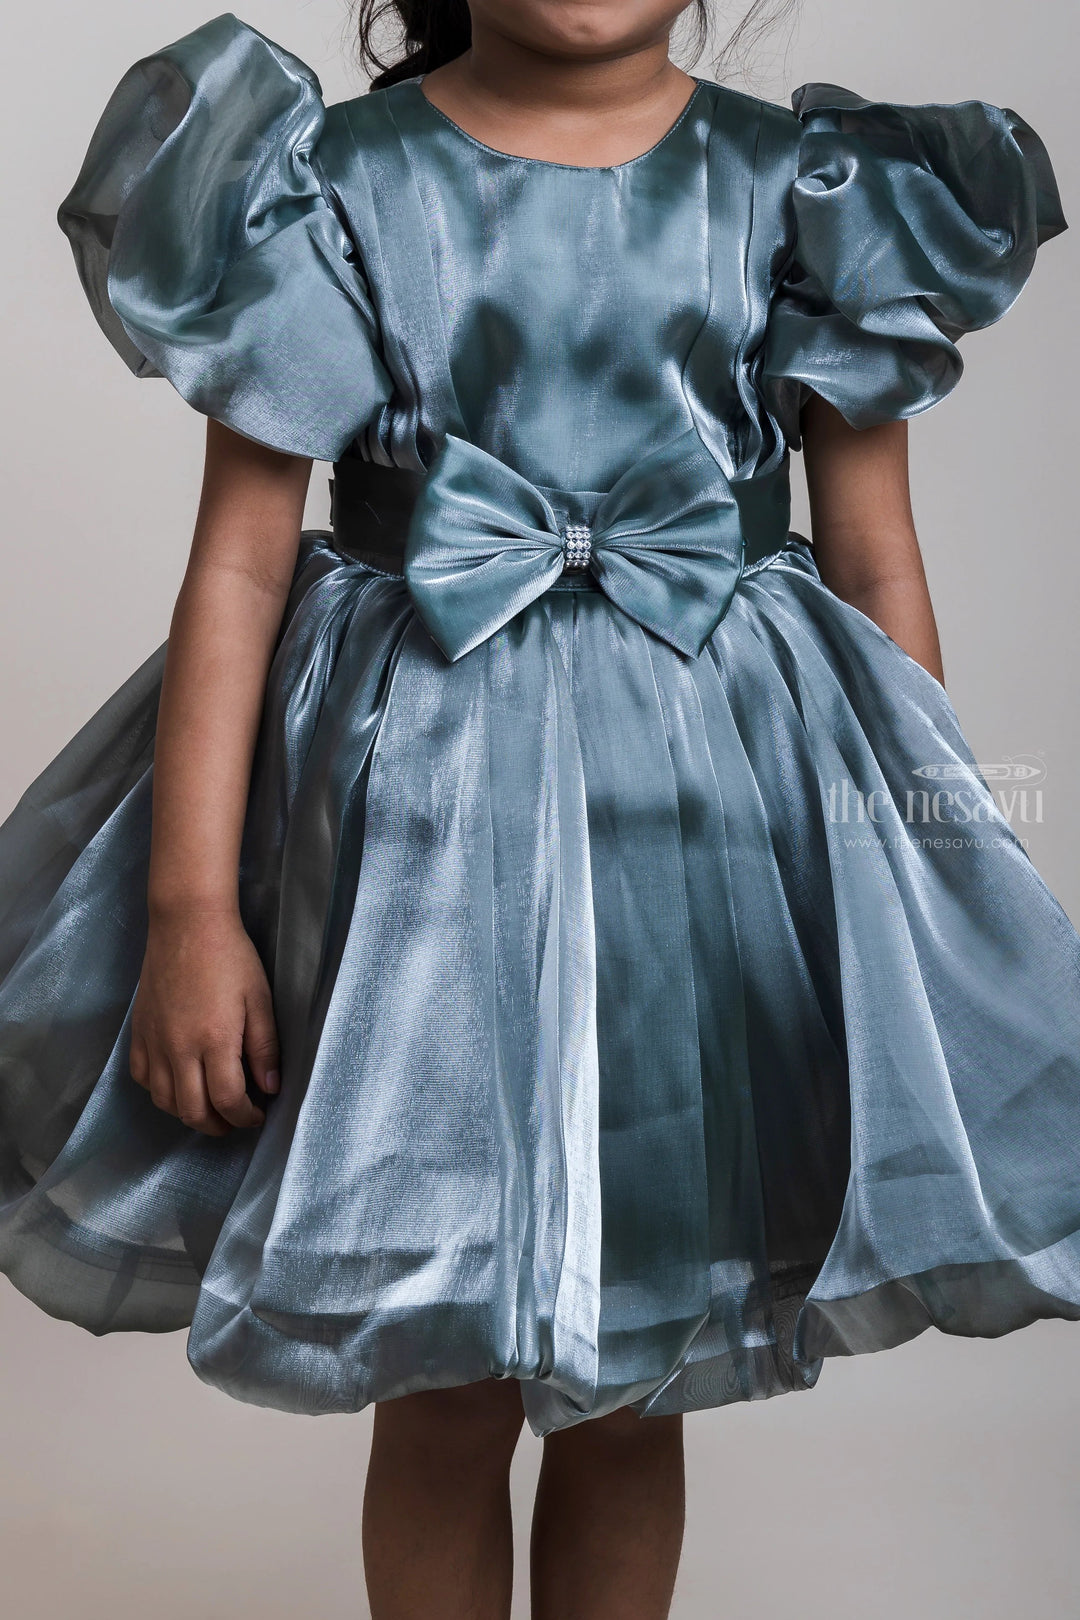 The Nesavu Party Frock Gorgeous Grey Designer Organza Frocks For Girls Nesavu Ruffled Sleeves Frocks Collection| Girls Birthday Dresses| The Nesavu